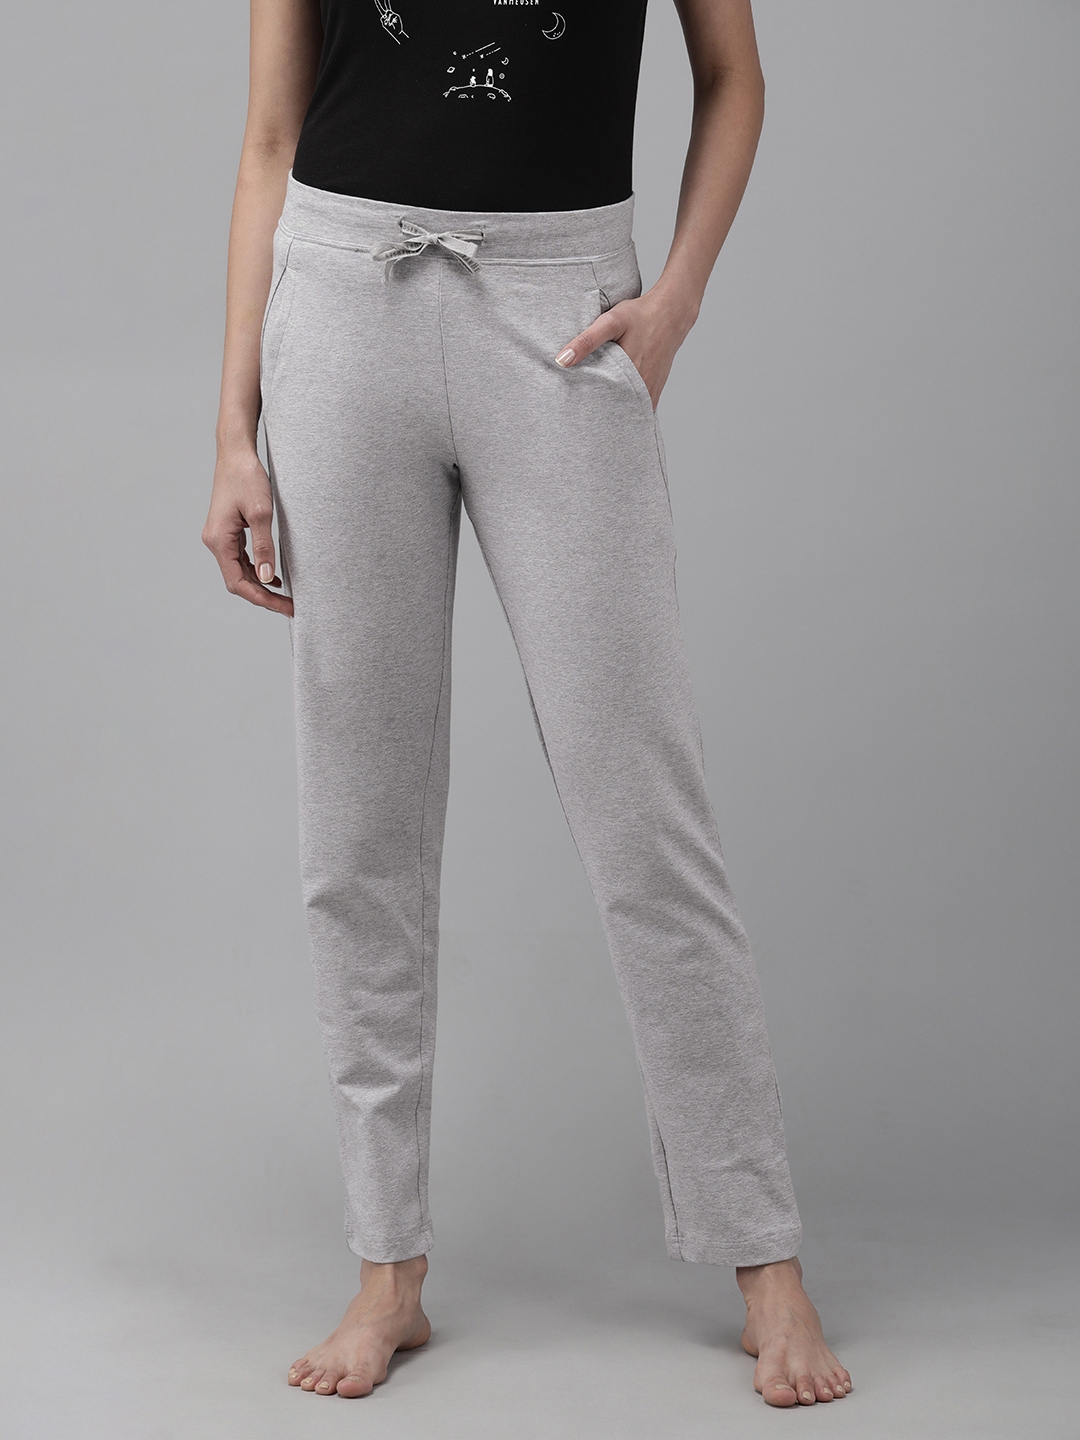 Van Heusen Women Relaxed Fit Lounge Pants - Cotton Elastane - Smart Tech+,  Easy Stain Release, Moisture Wicking